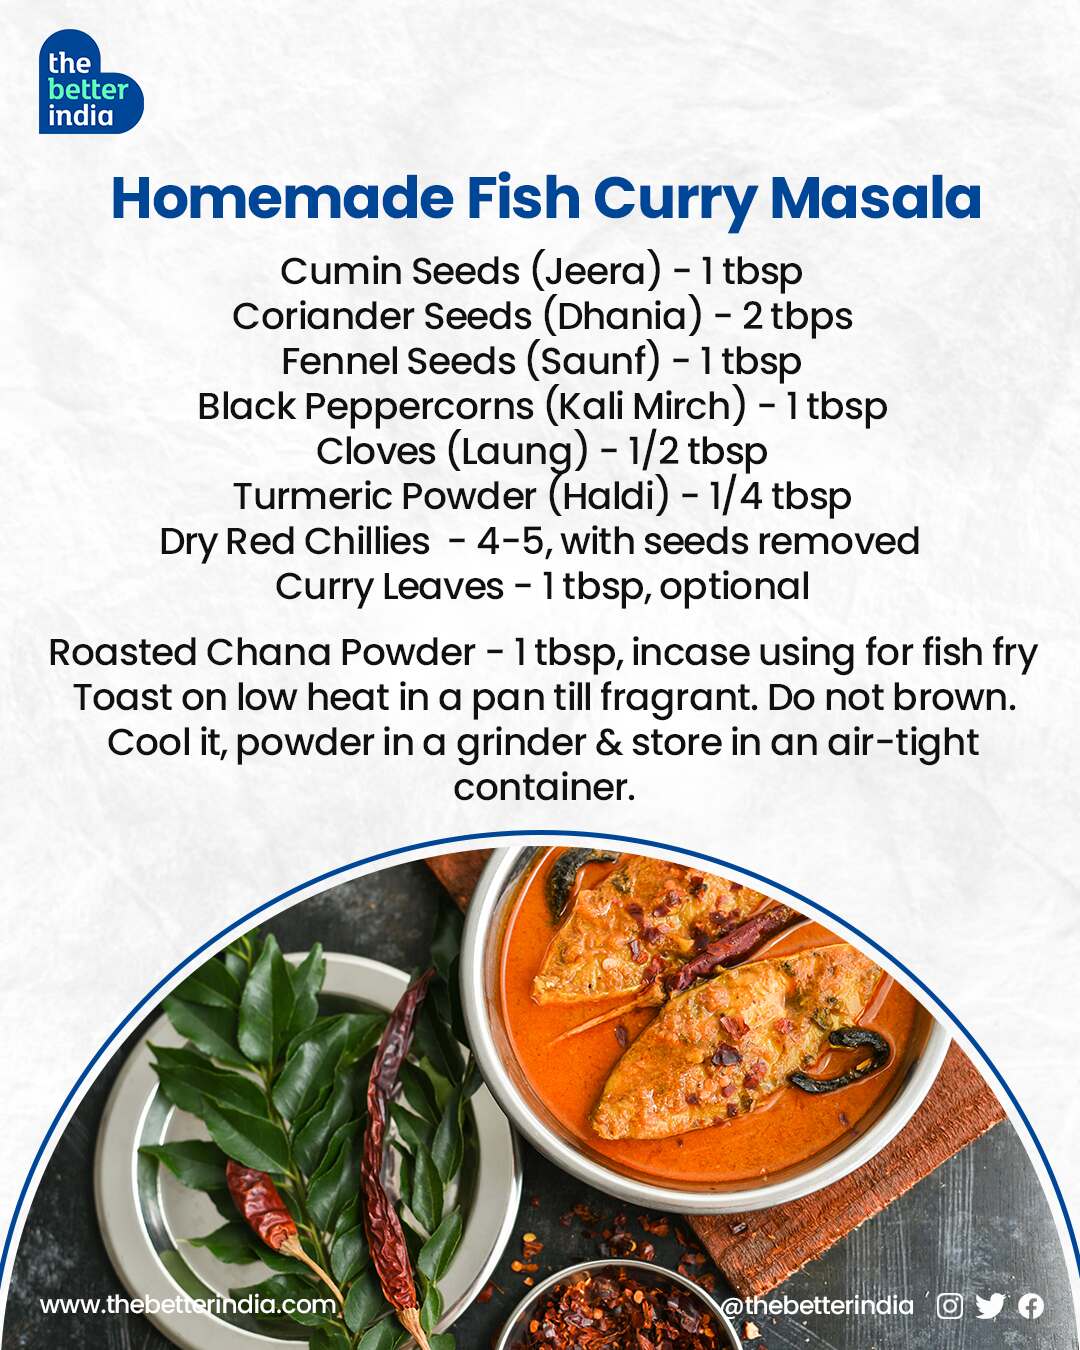 Homemade fish curry masala recipe